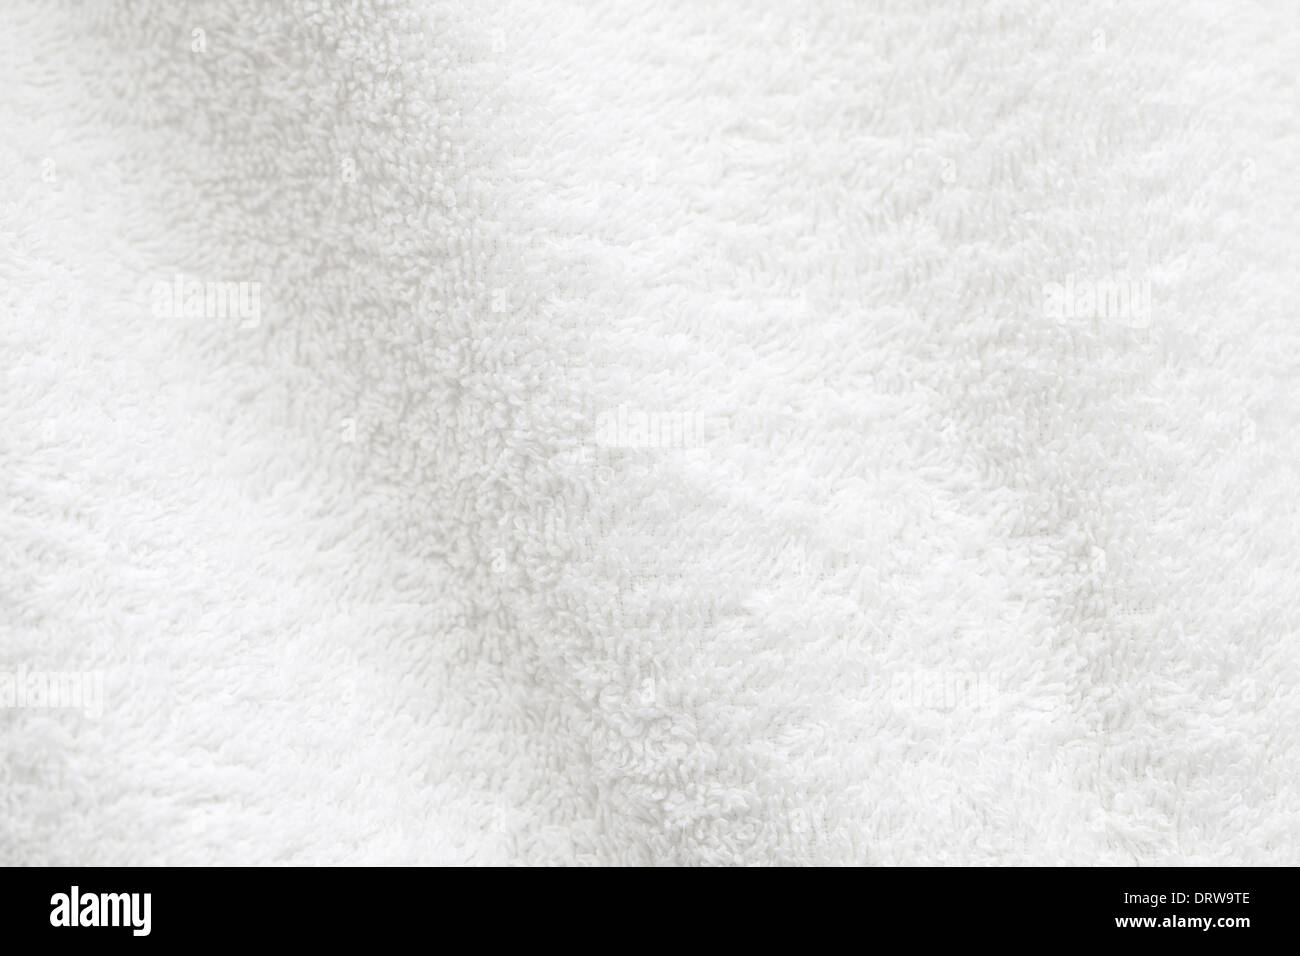 White cotton towel close up background photo texture Stock Photo